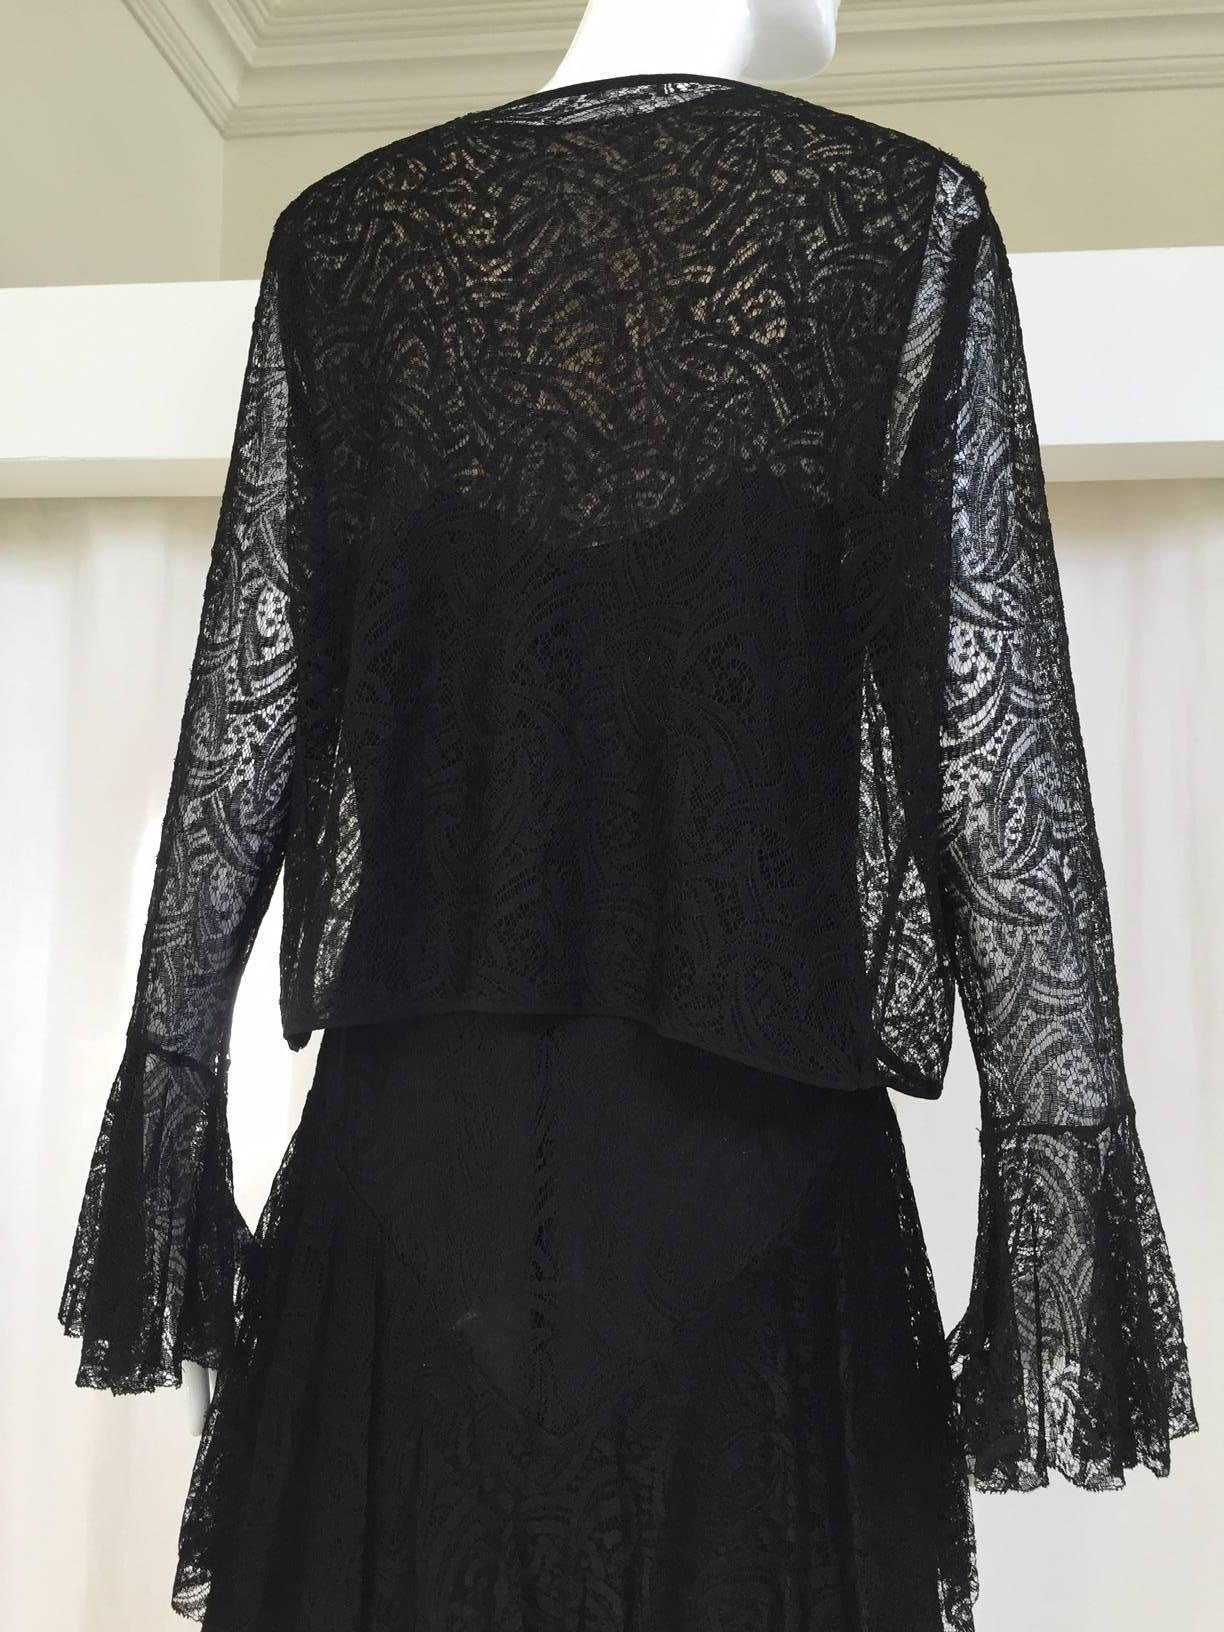 1930s Black lace dress with cardigan jacket and belt ensemble 4